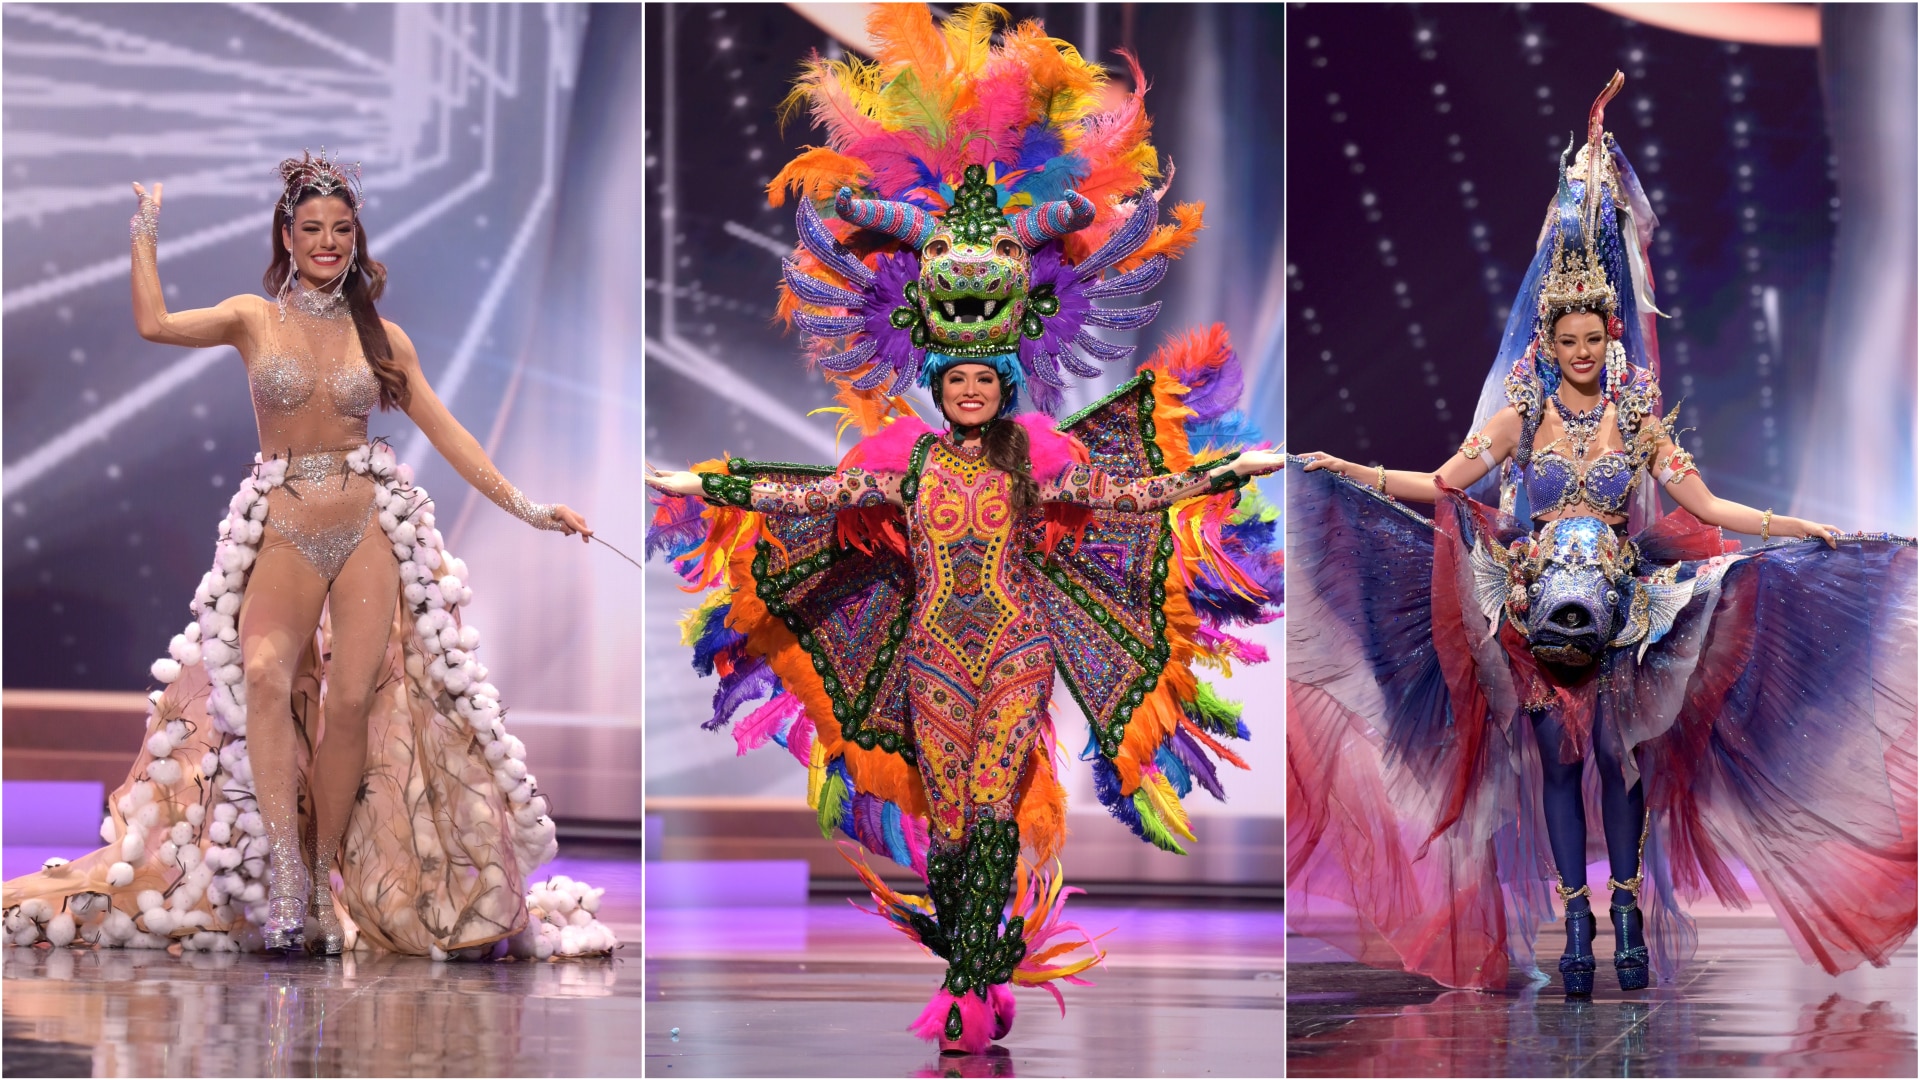 Watch Miss Universo Highlight Miss Universo Desfile en Traje Típico